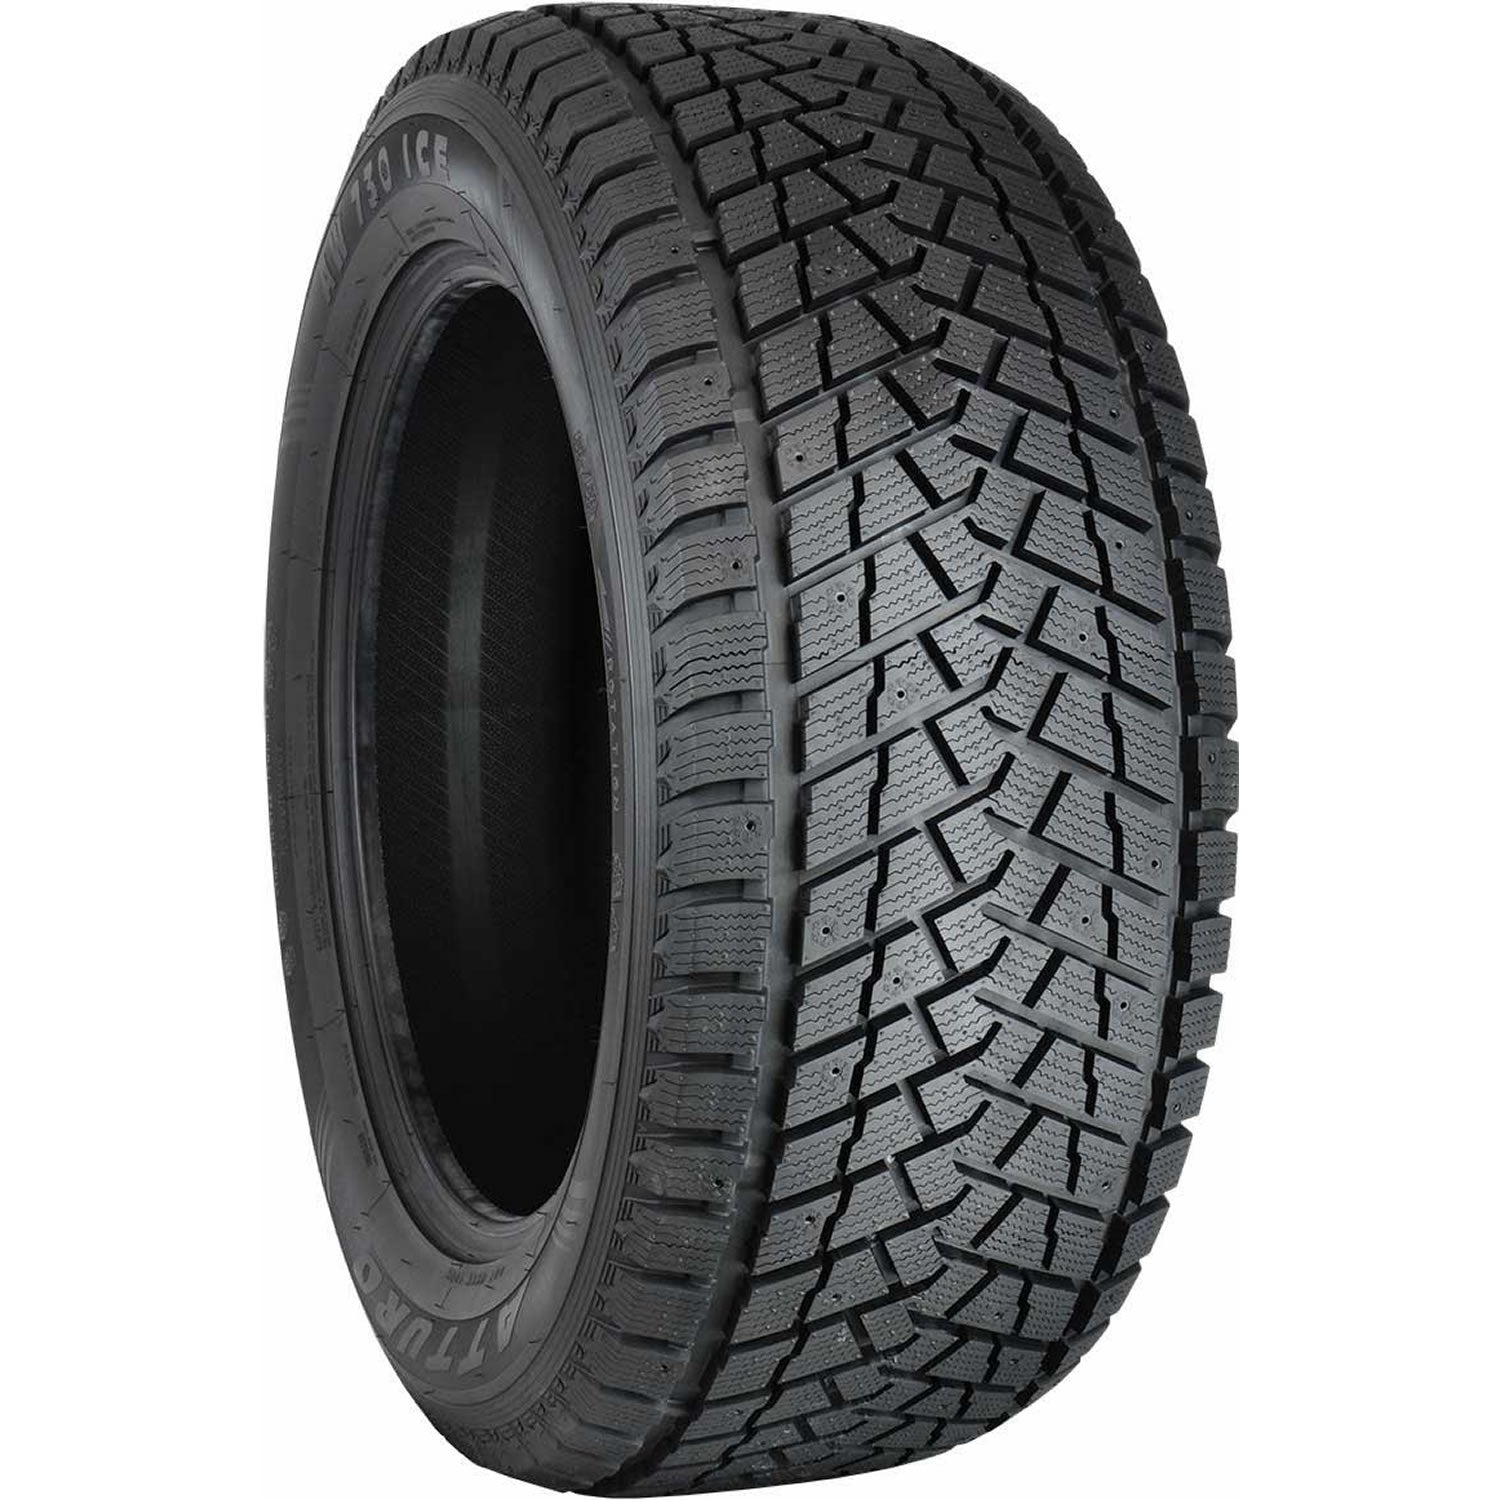 ATTURO AW730 ICE 275/40R20 (28.8X10.8R 20) Tires